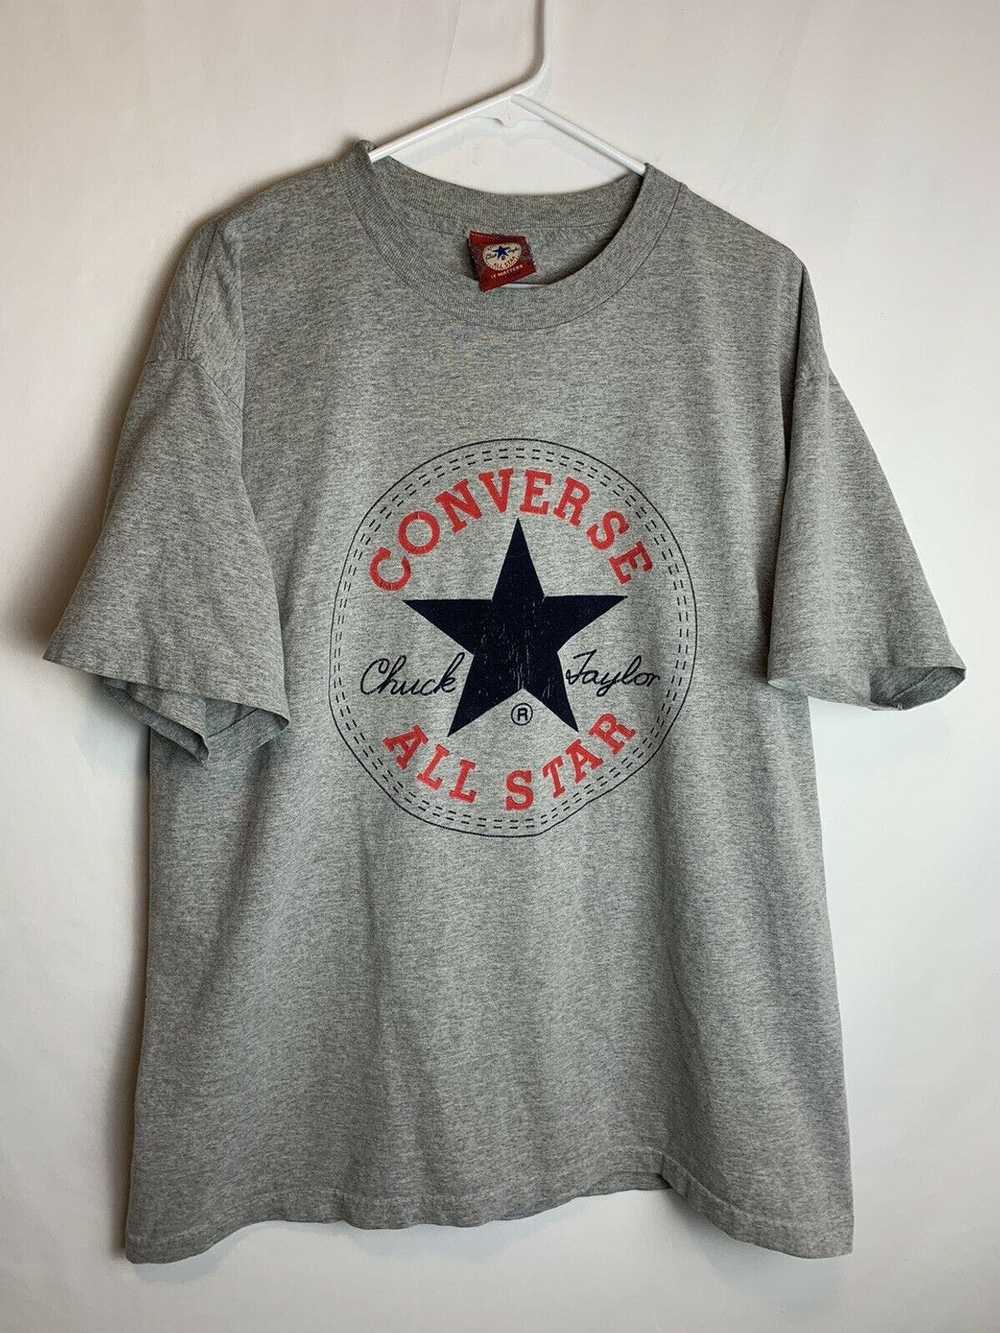 Converse Converse Chuck Taylor Made In USA Vintag… - image 1